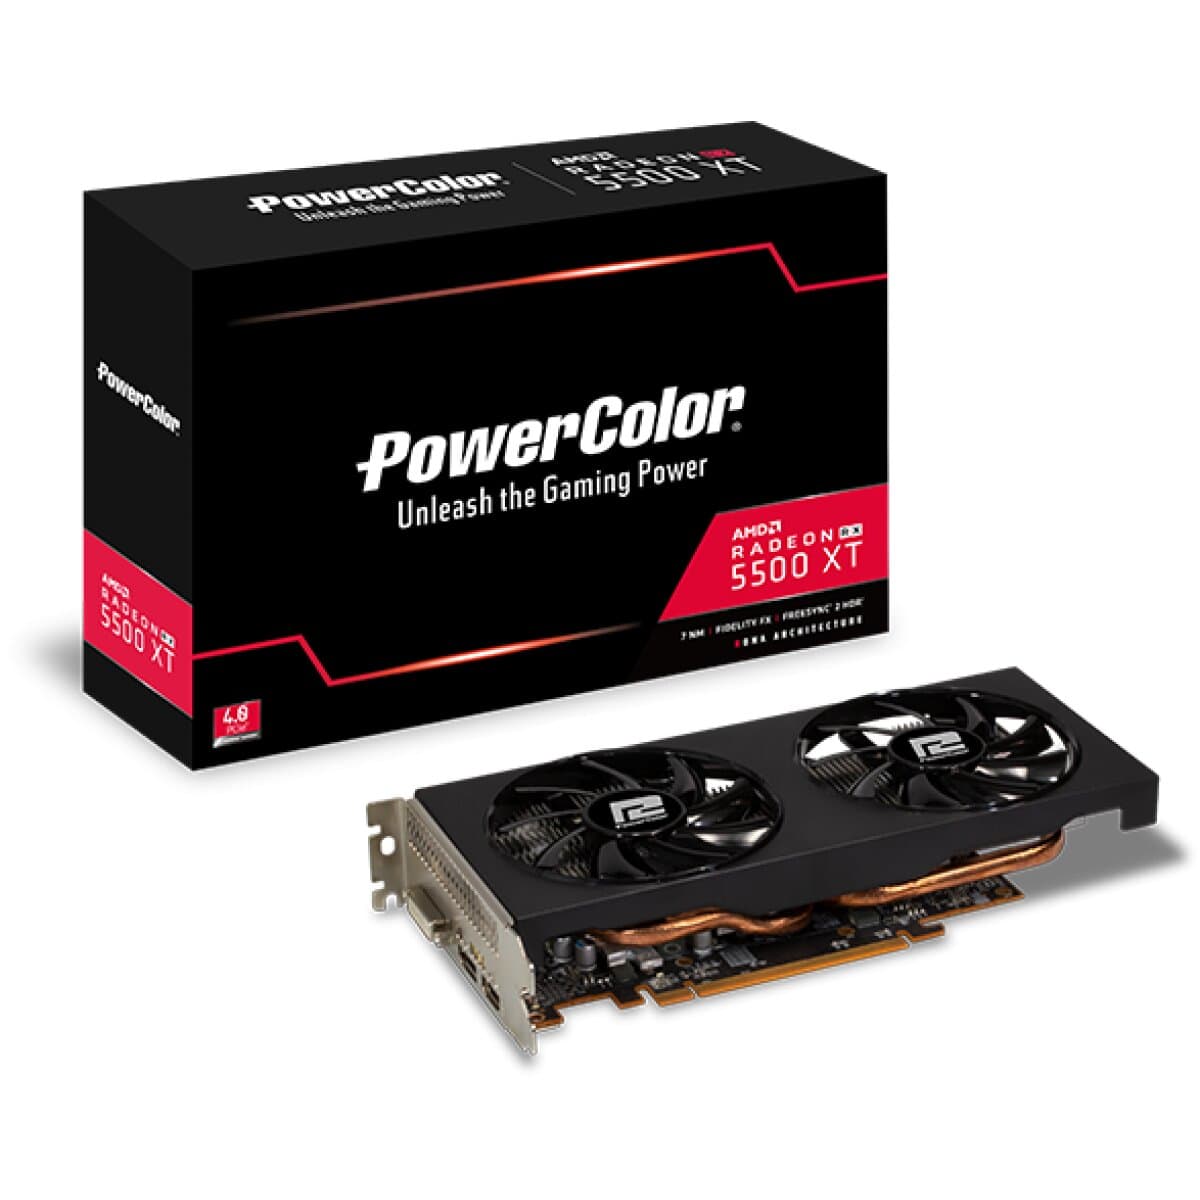 Placa de Vídeo PowerColor Radeon Navi RX 5500 XT, Dual Fan, 4GB GDDR6, 128Bit - AXRX 5500XT 4GBD6-DH / OC